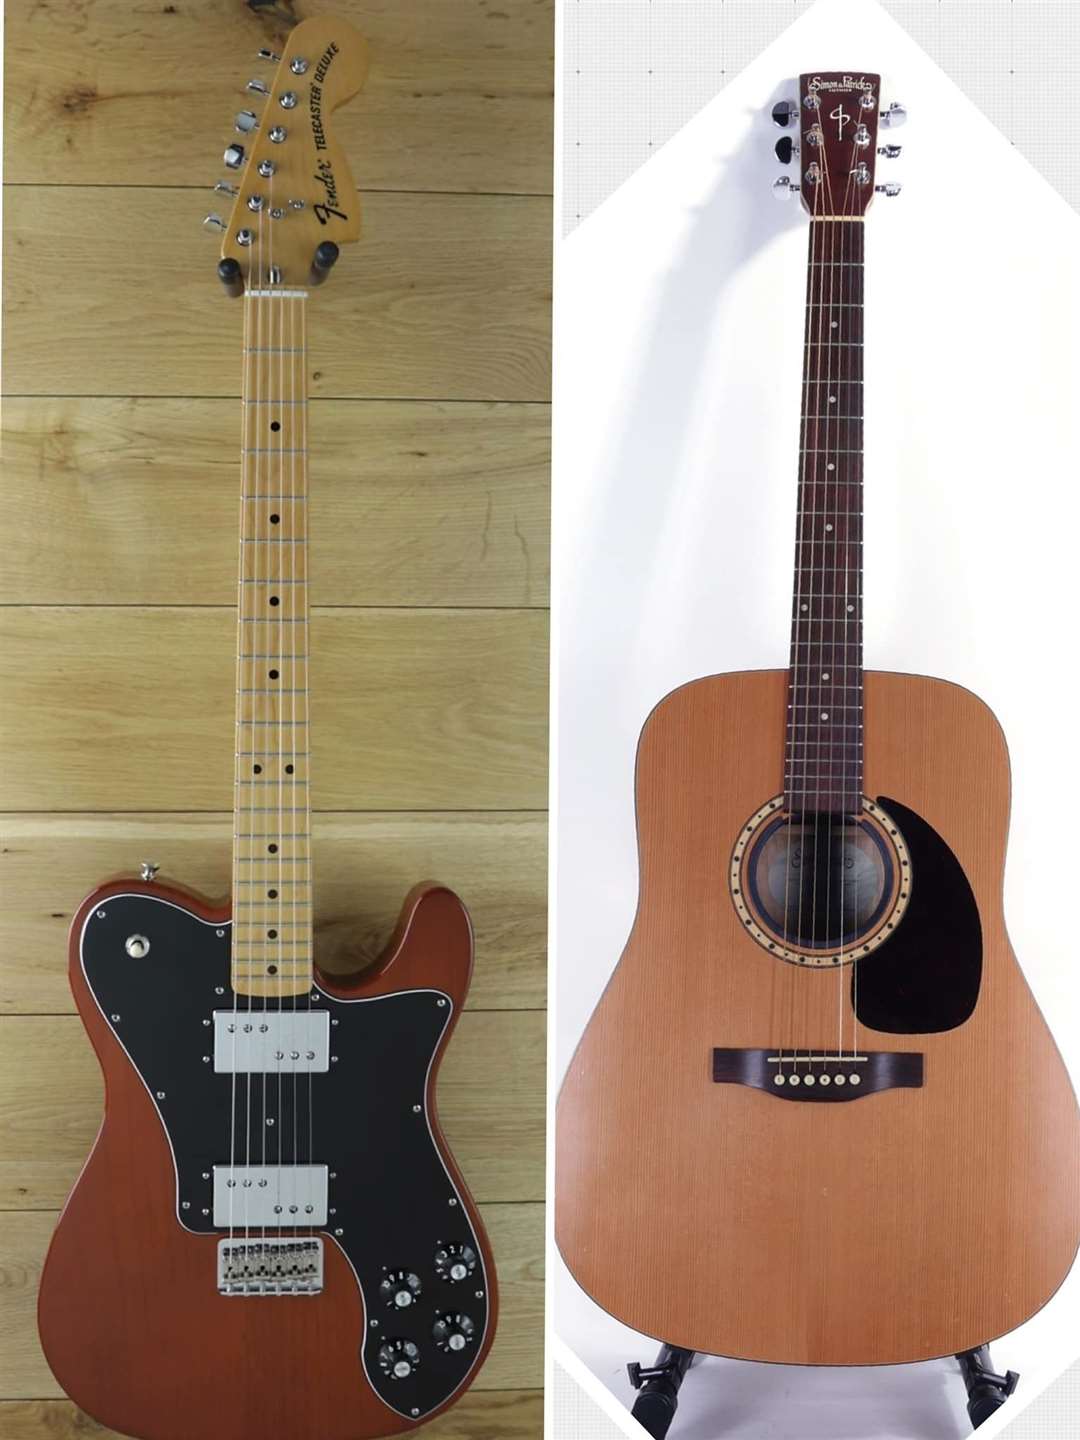 Fender Telecaster Deluxe, Simon & Patrick S6 acoustic guitar,